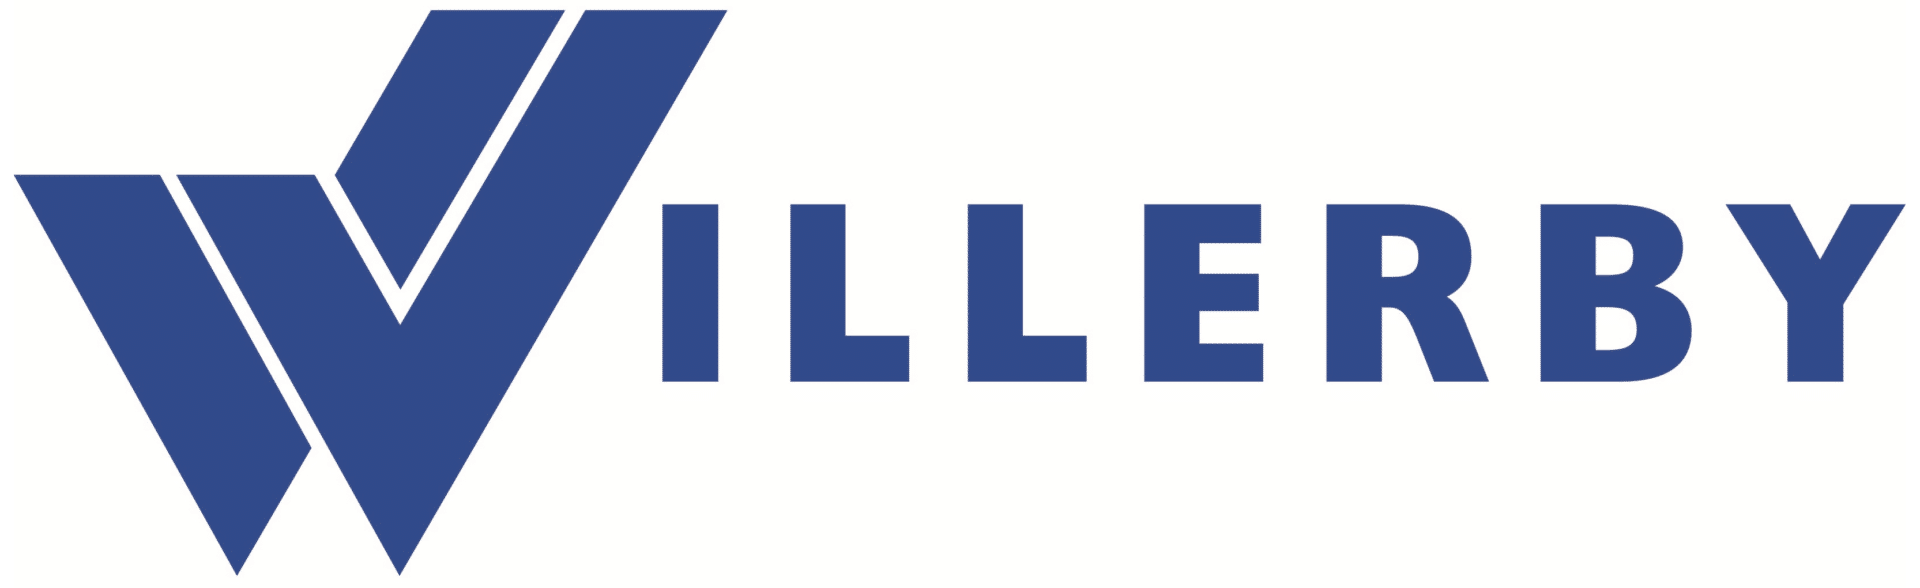 logo willerby mobil home anglais